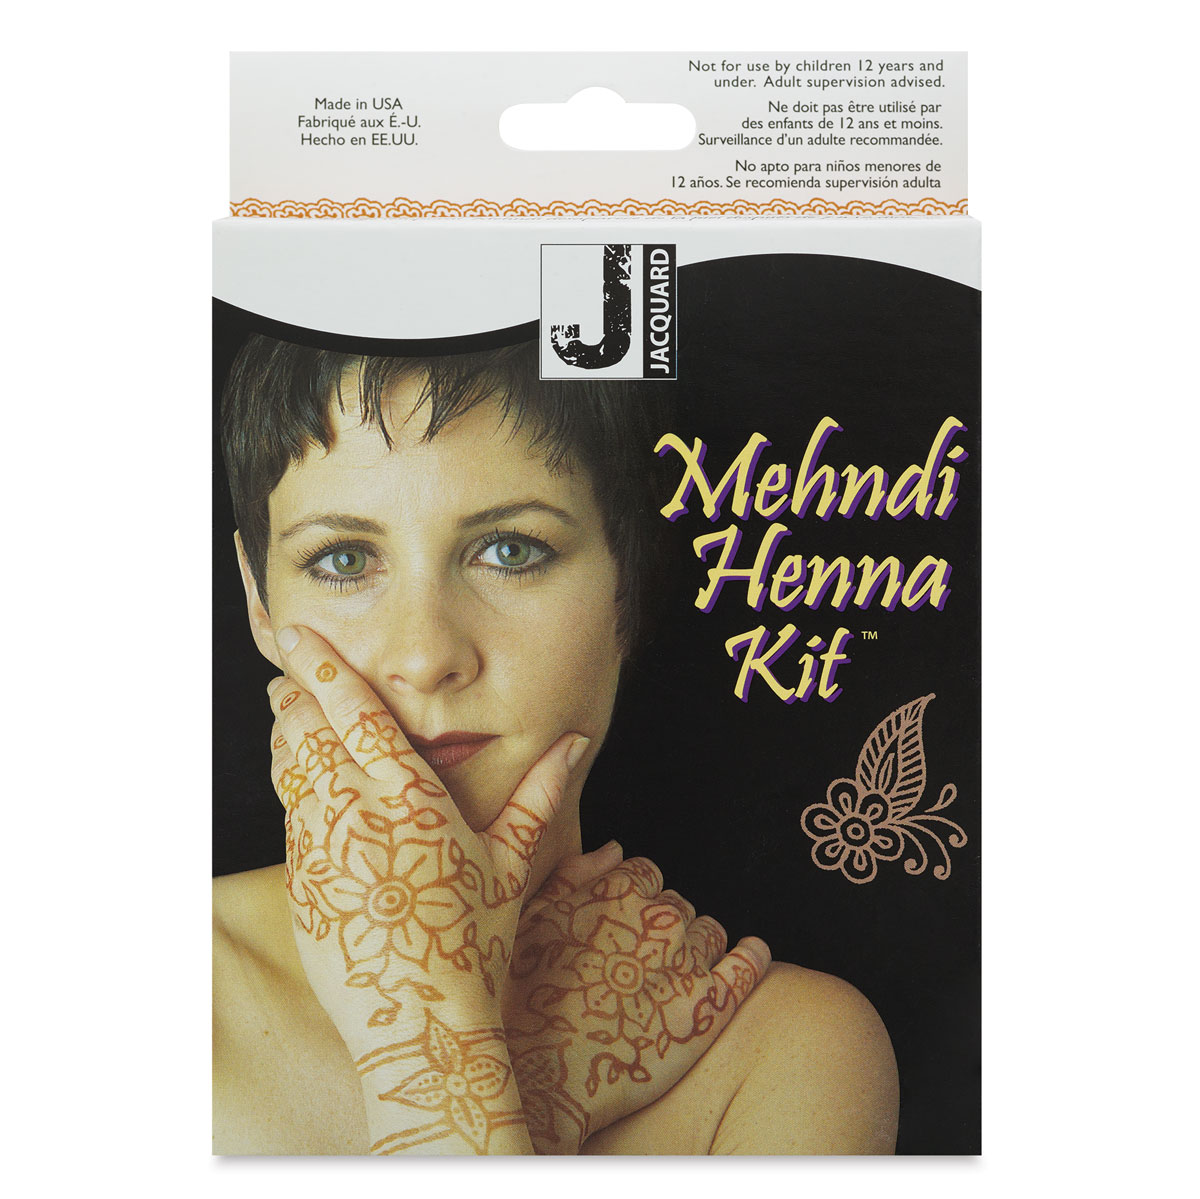 Earth Henna Premium Body Painting Kit